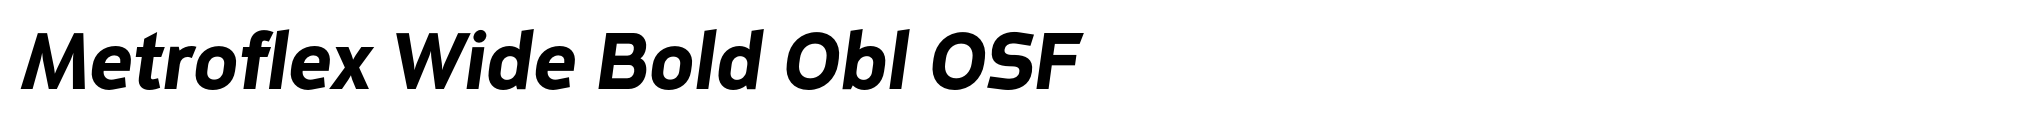 Metroflex Wide Bold Obl OSF image